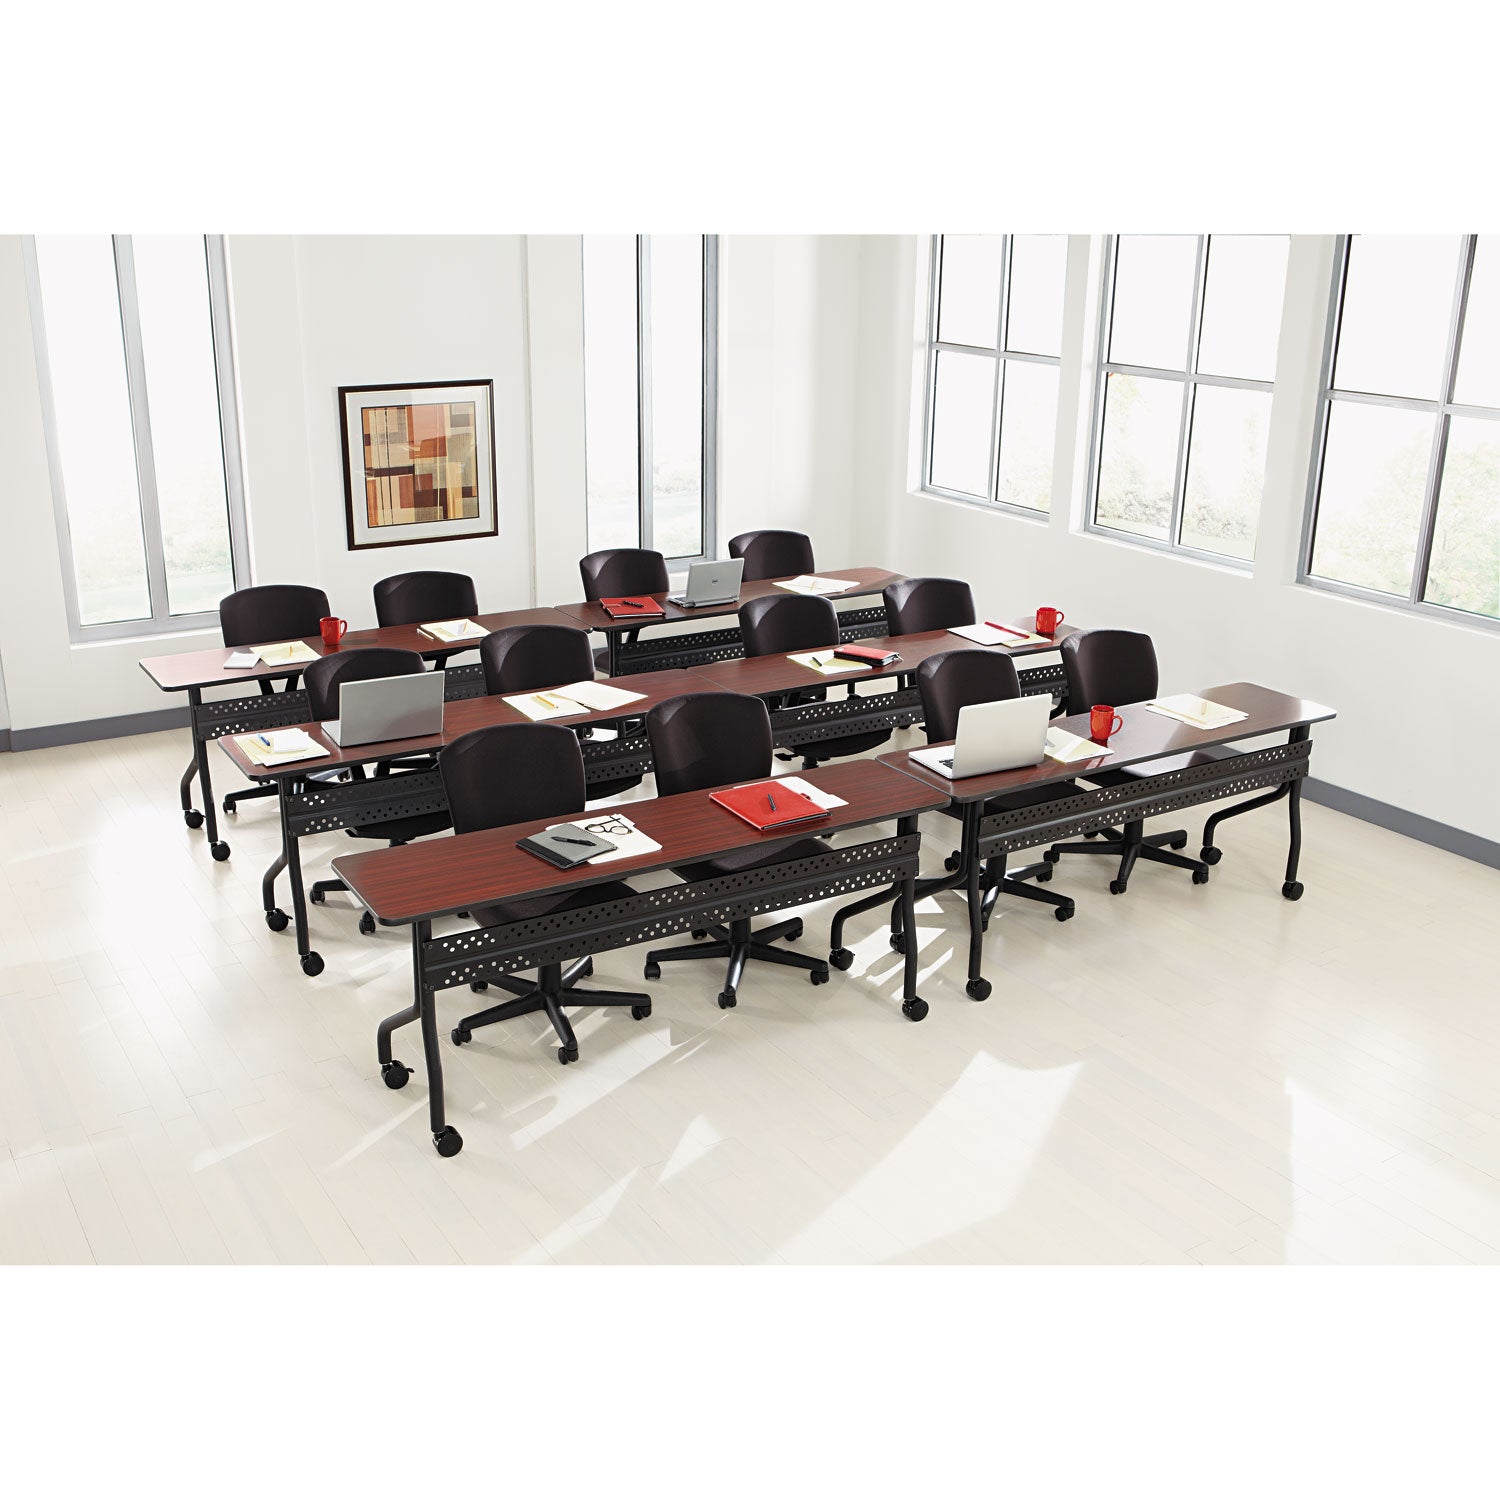 OfficeWorks Mobile Training Table, Rectangular, 72" x 18" x 29", Mahogany/Black - 